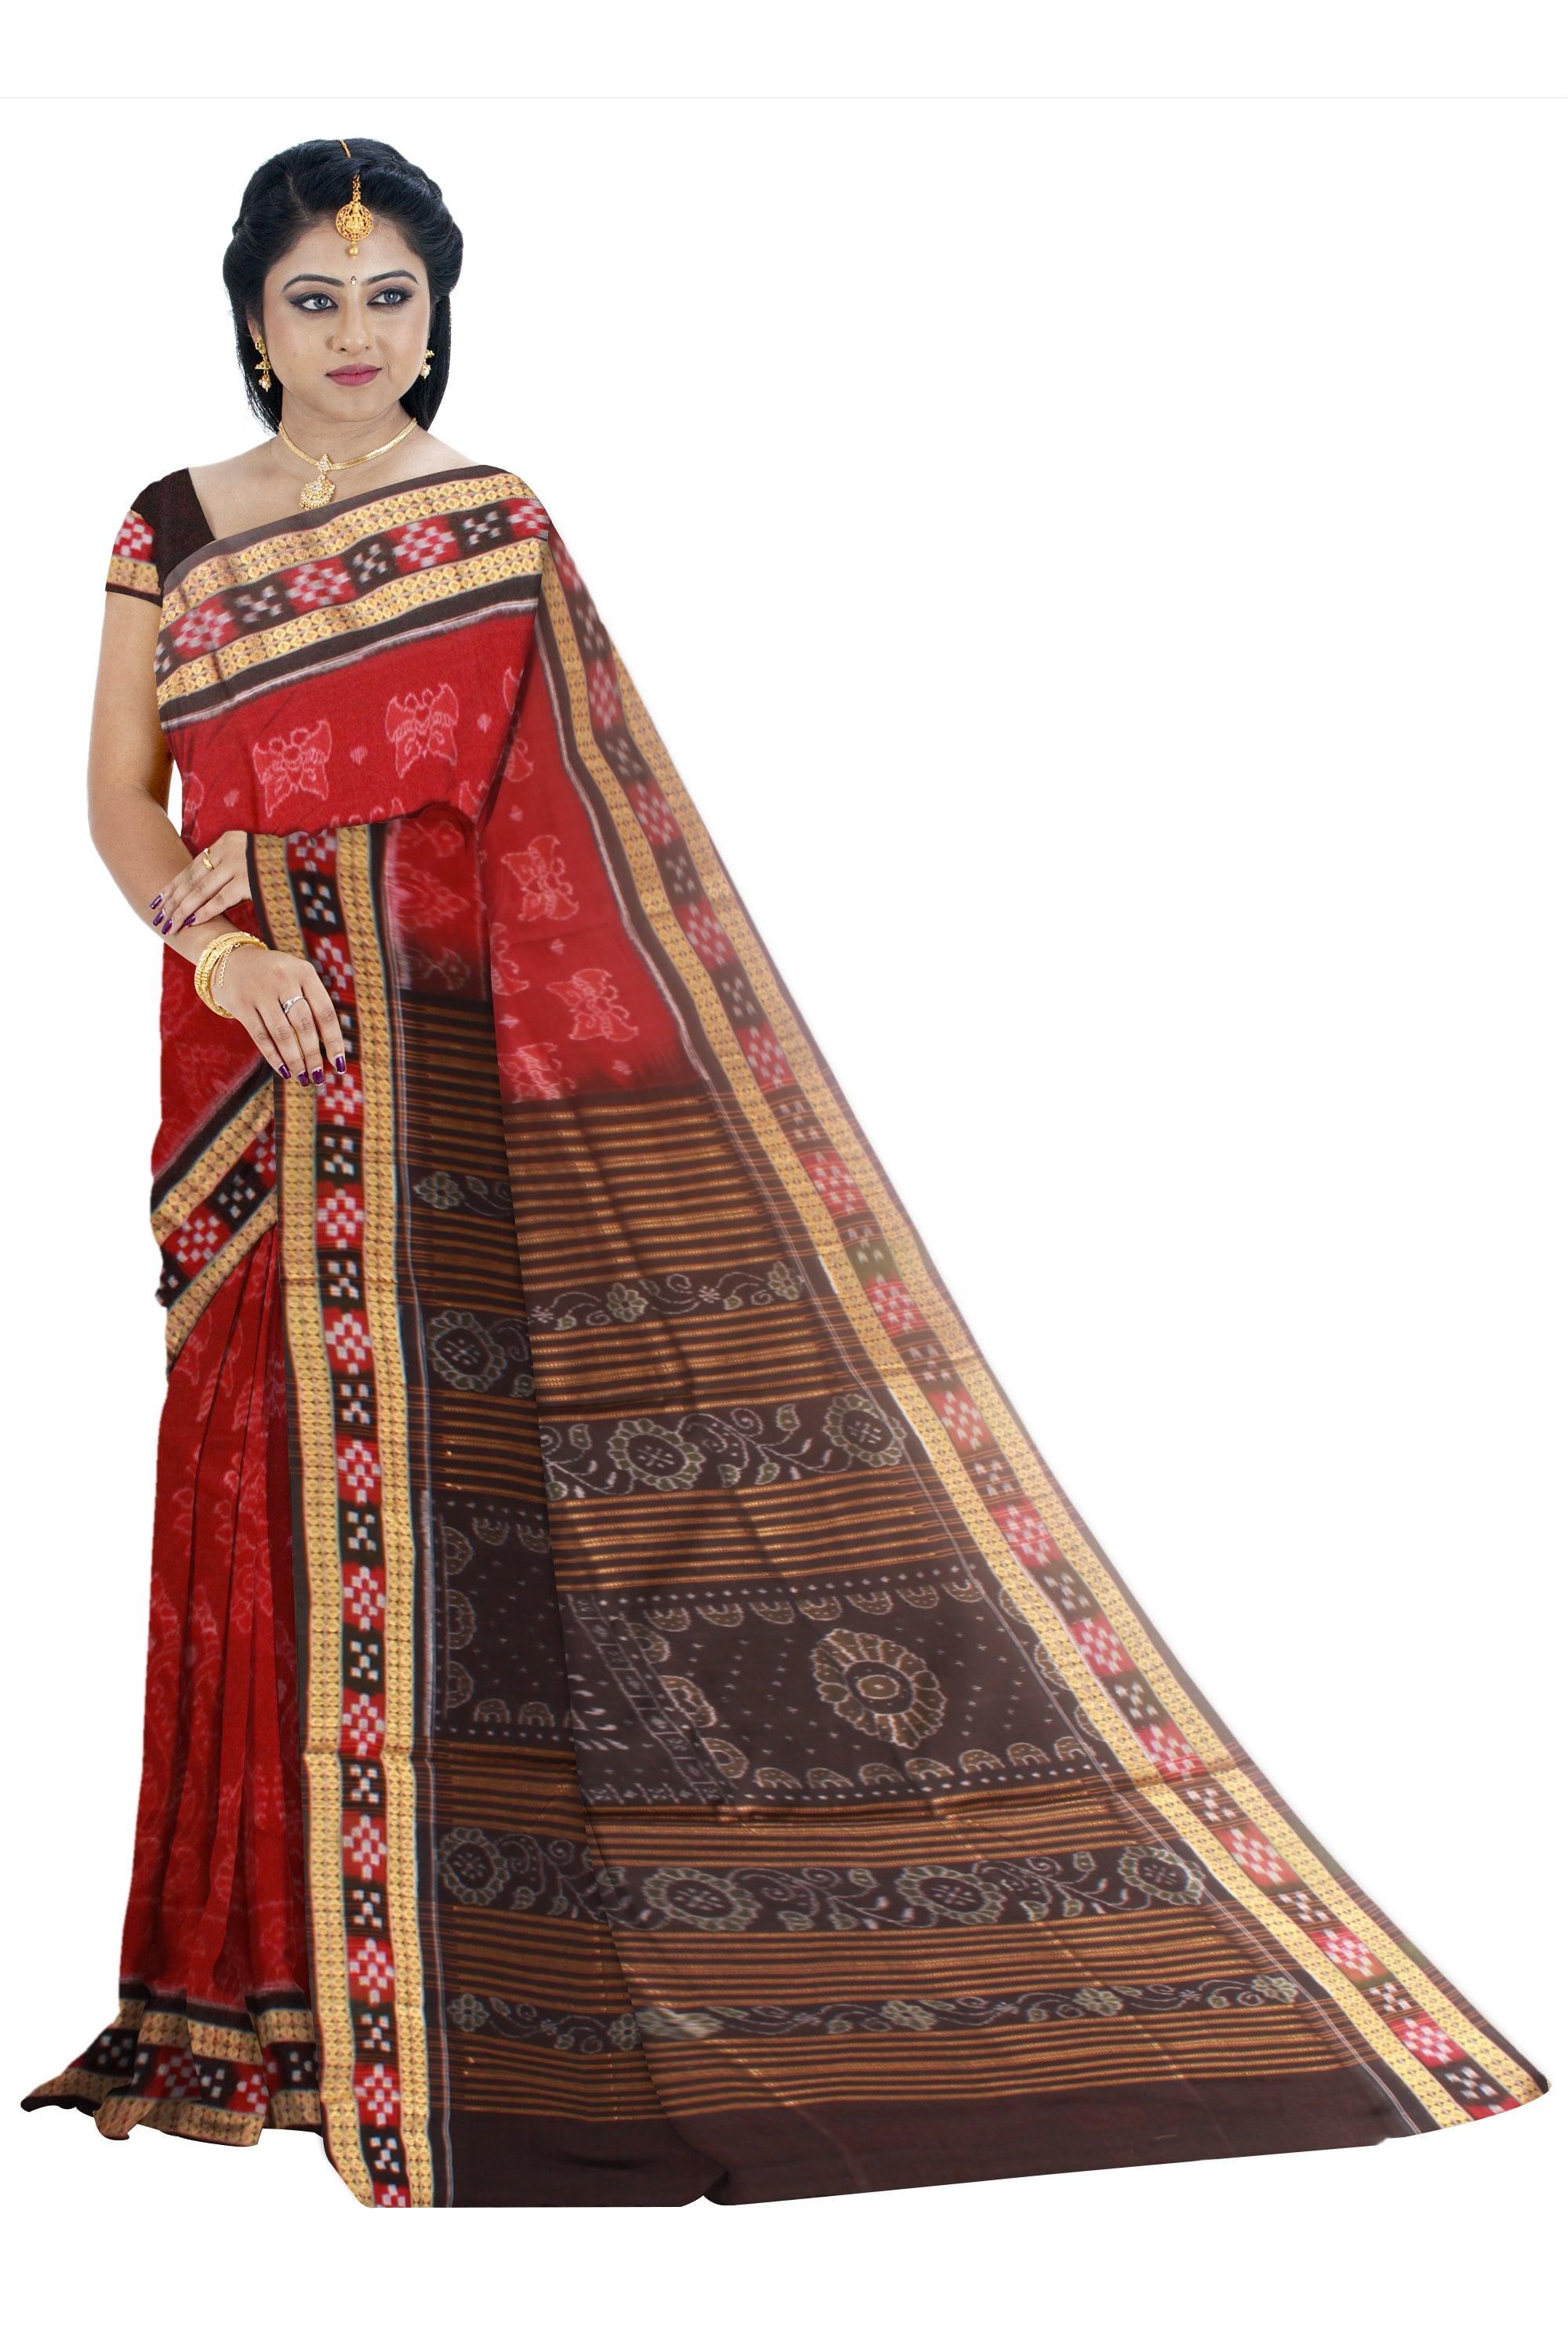 Sambalpuri cotton Saree in Red and Black Color  with blouse piece. - Koshali Arts & Crafts Enterprise